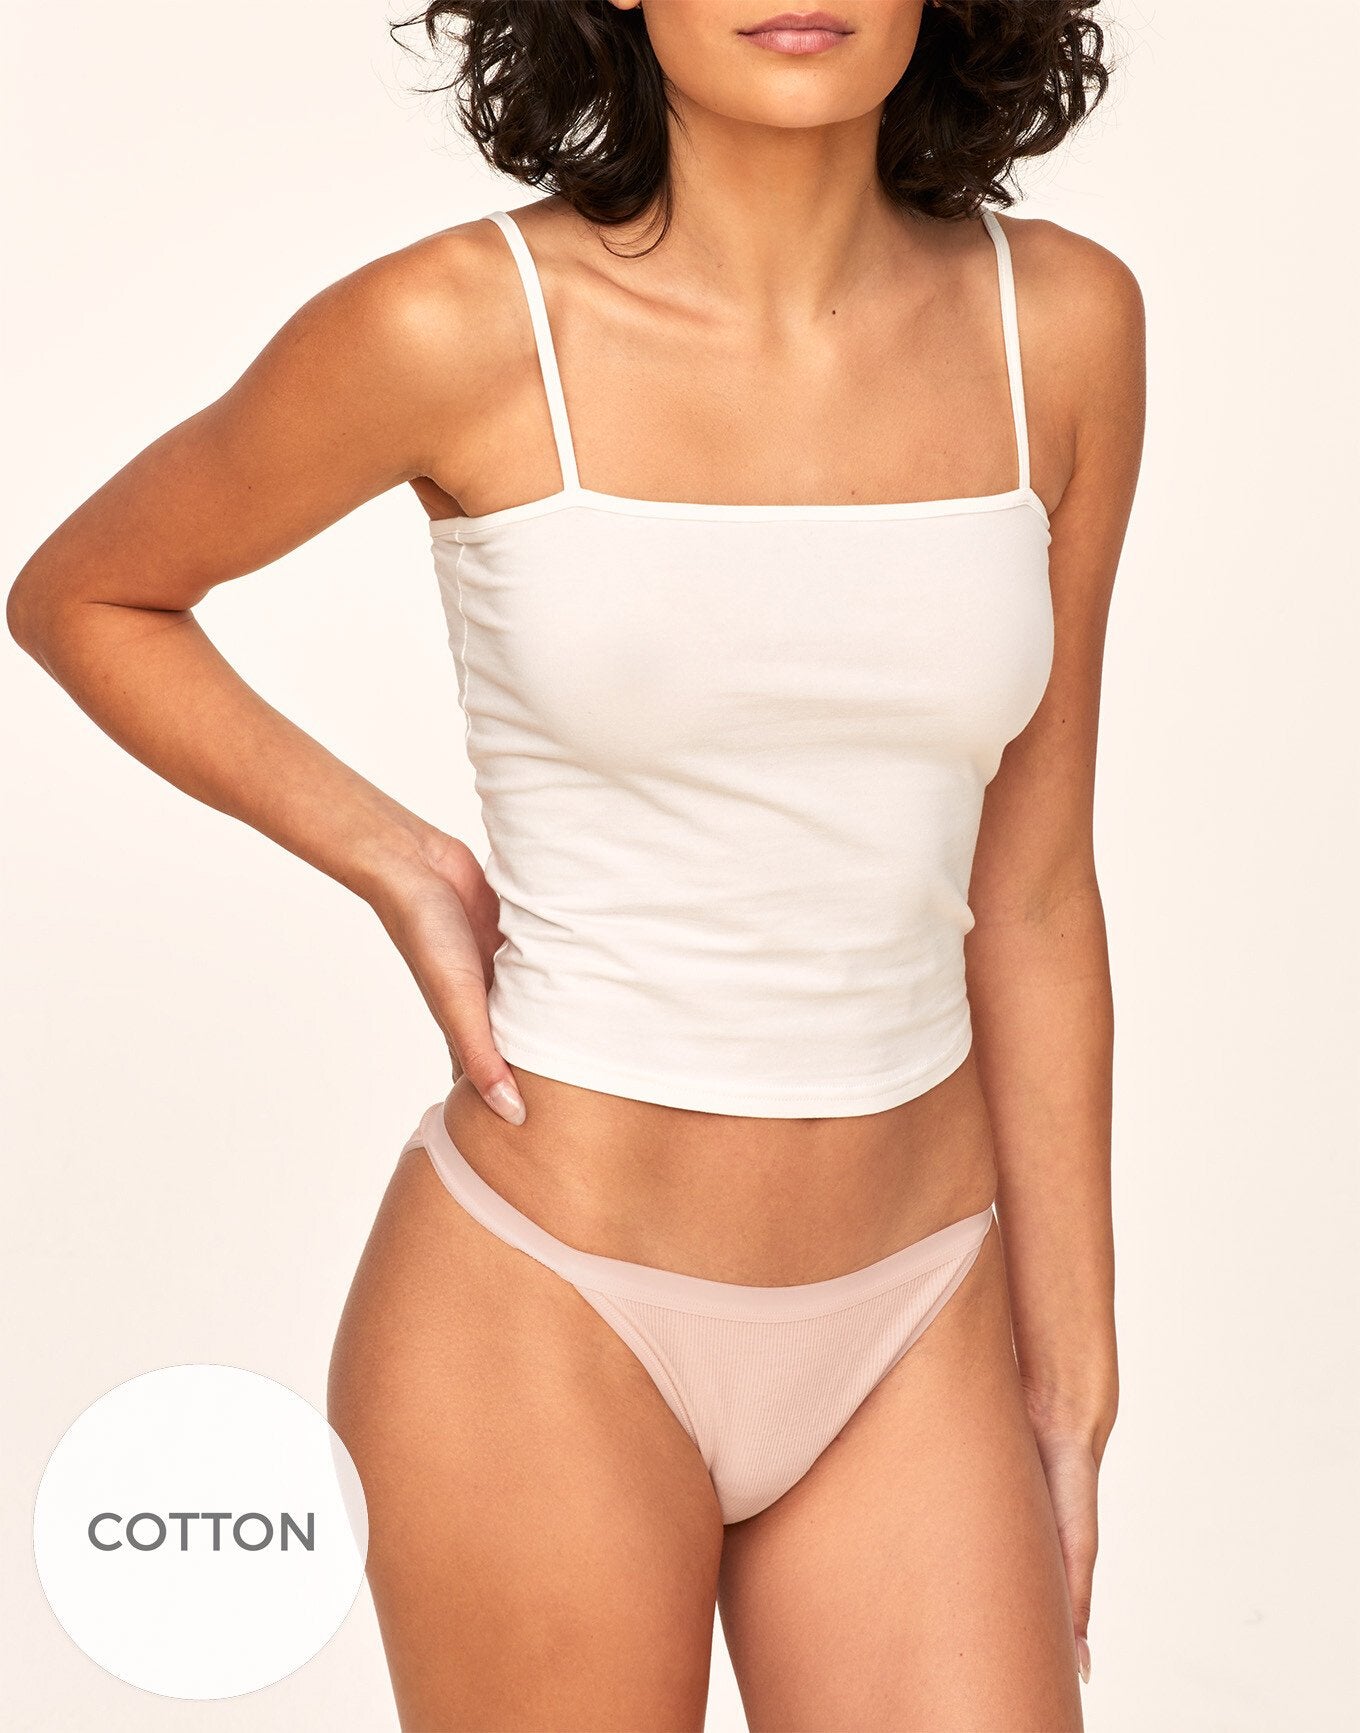 Adore Me Diana Ribbed Cotton Bikini in color PchNctar 74S3 and shape bikini